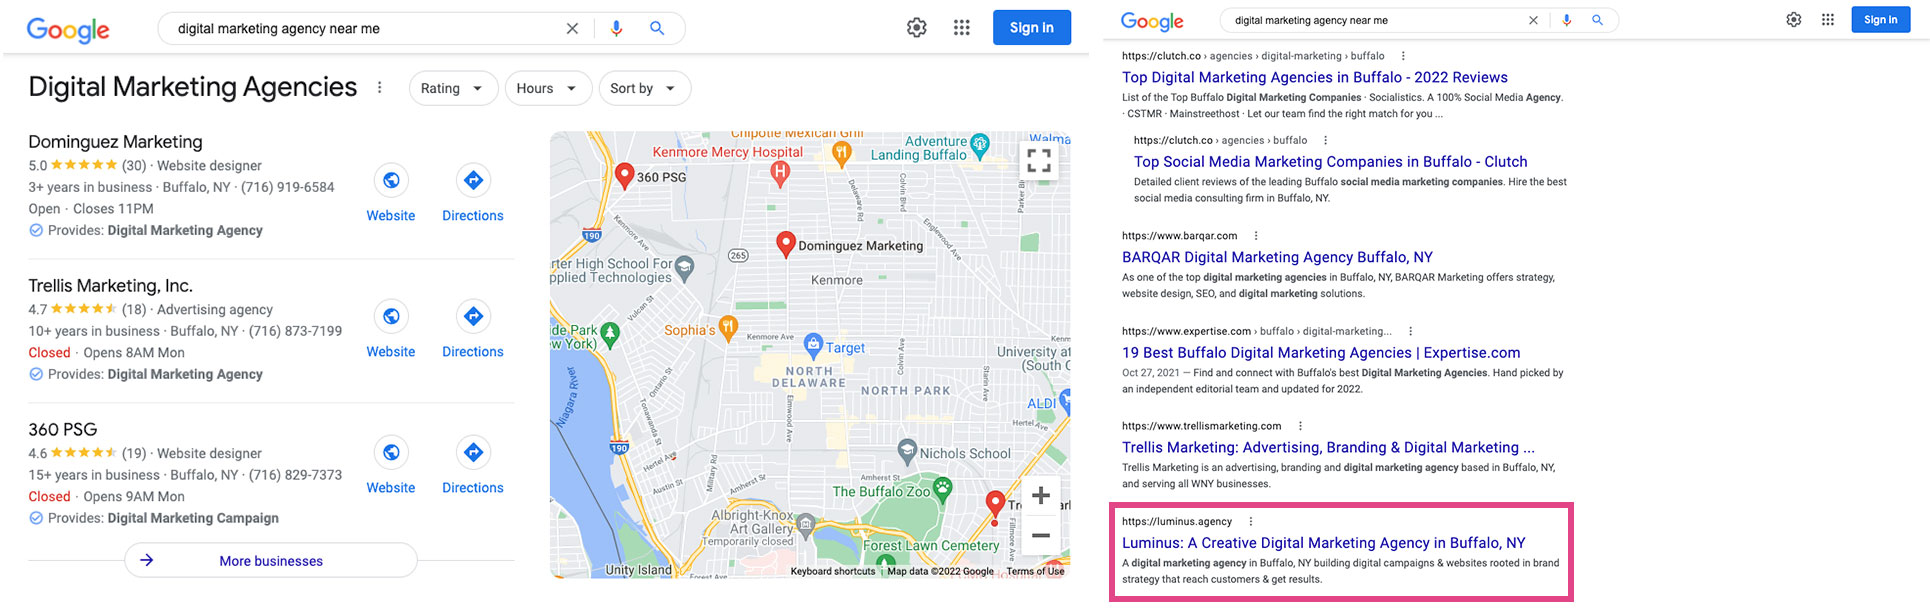 How does Local SEO impact search rankings? | Google Map Optimization | SEO Agency Near Me | SEO Company Near Me